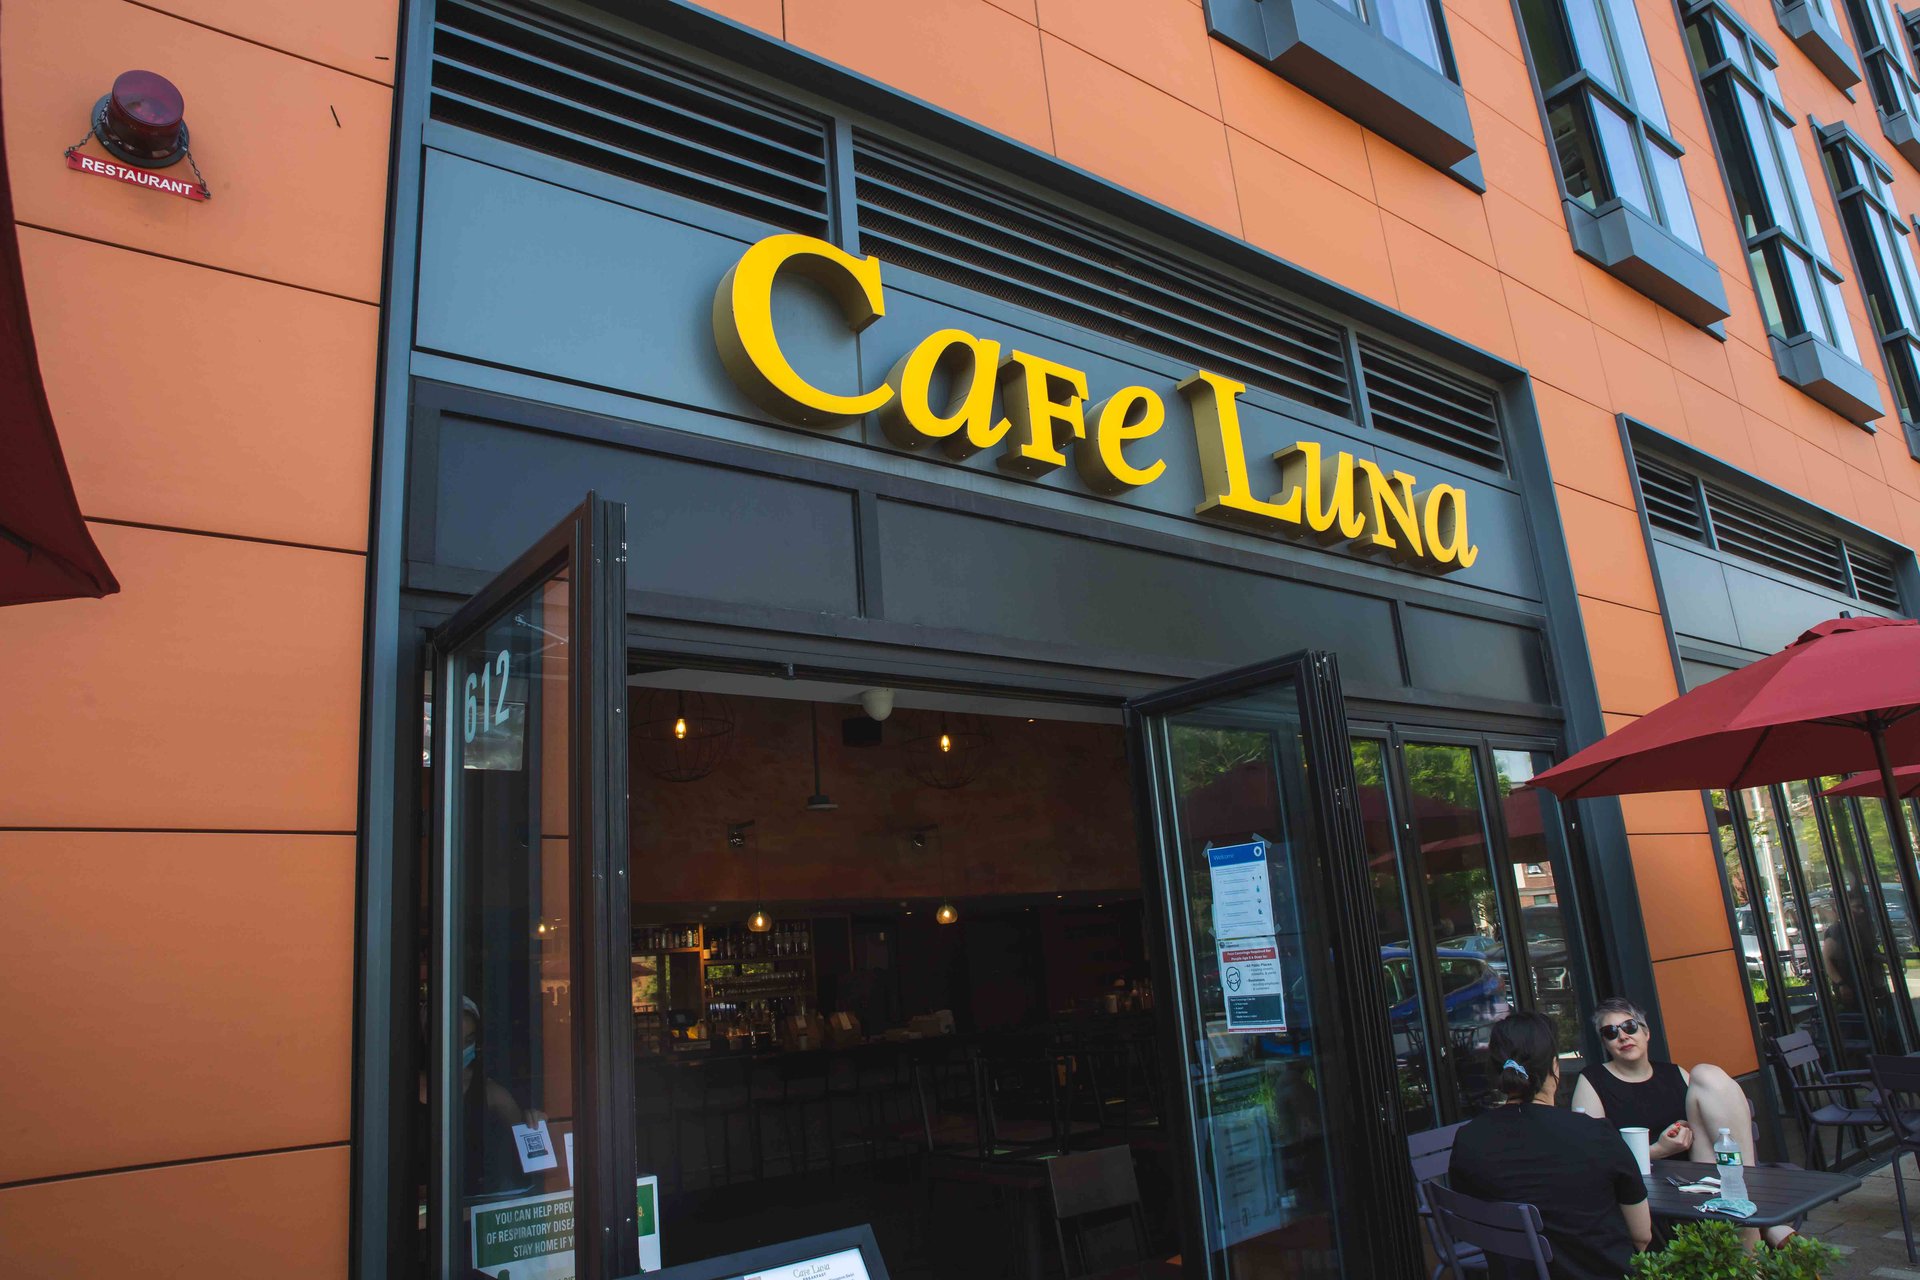 Cafe Luna in Weston, Massachusetts